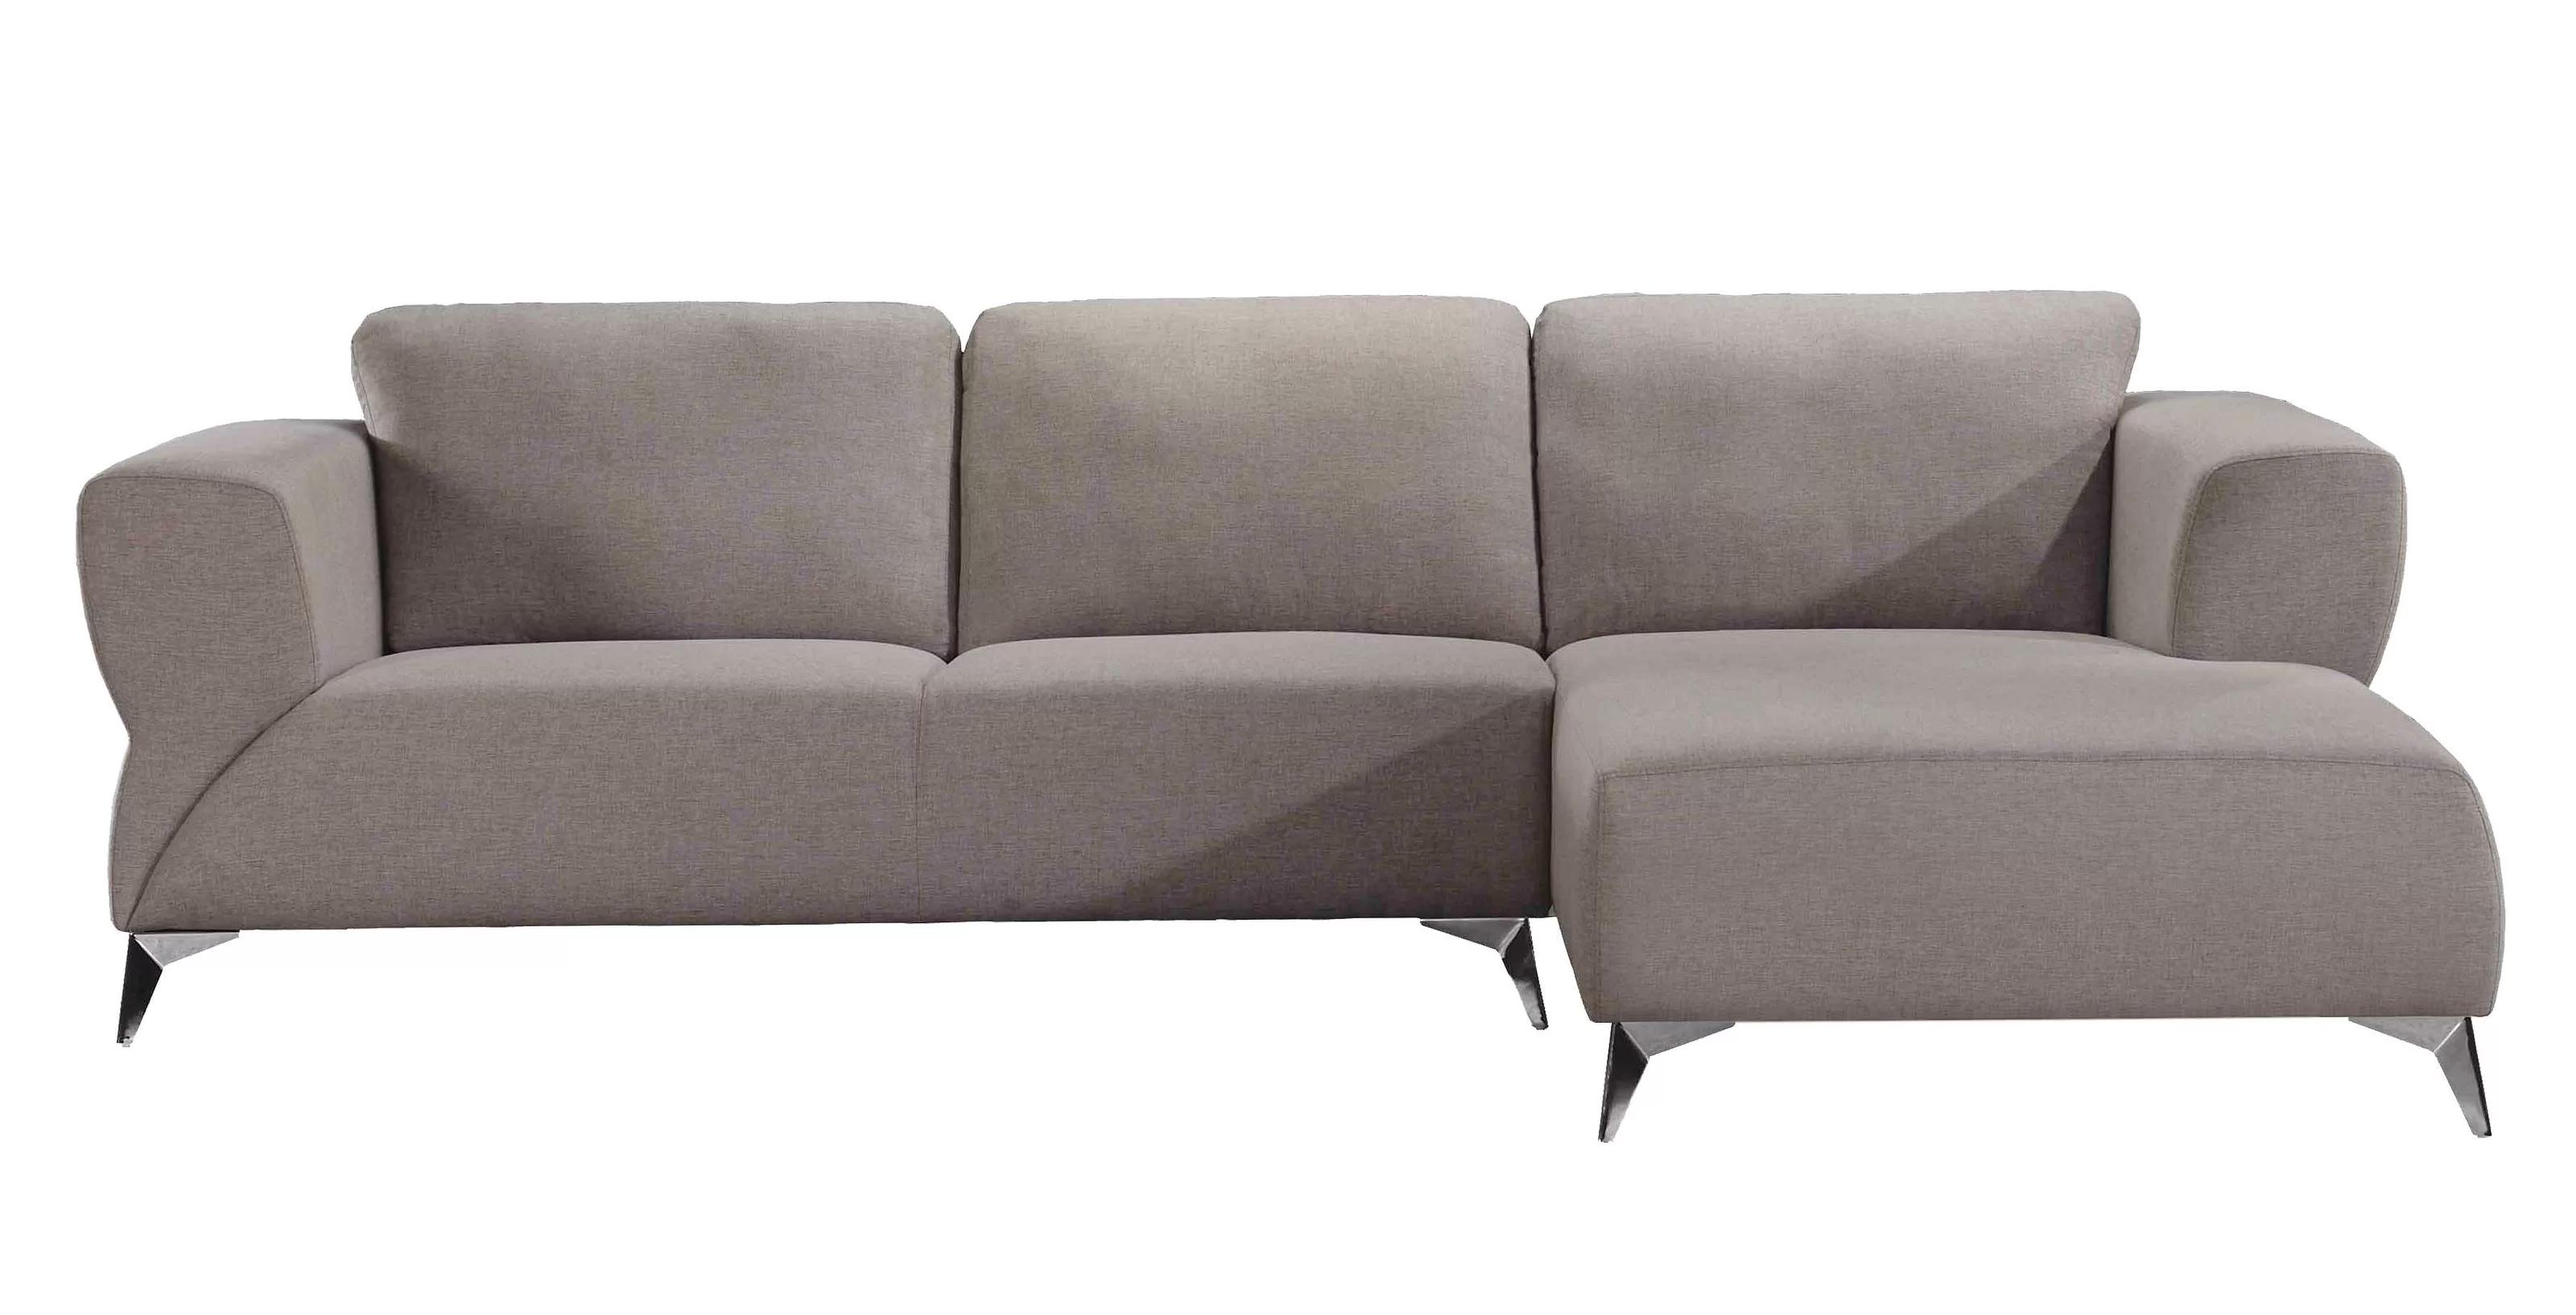 Modern, Simple Sectional Sofa Josiah 55095-2pcs in Sand Fabric